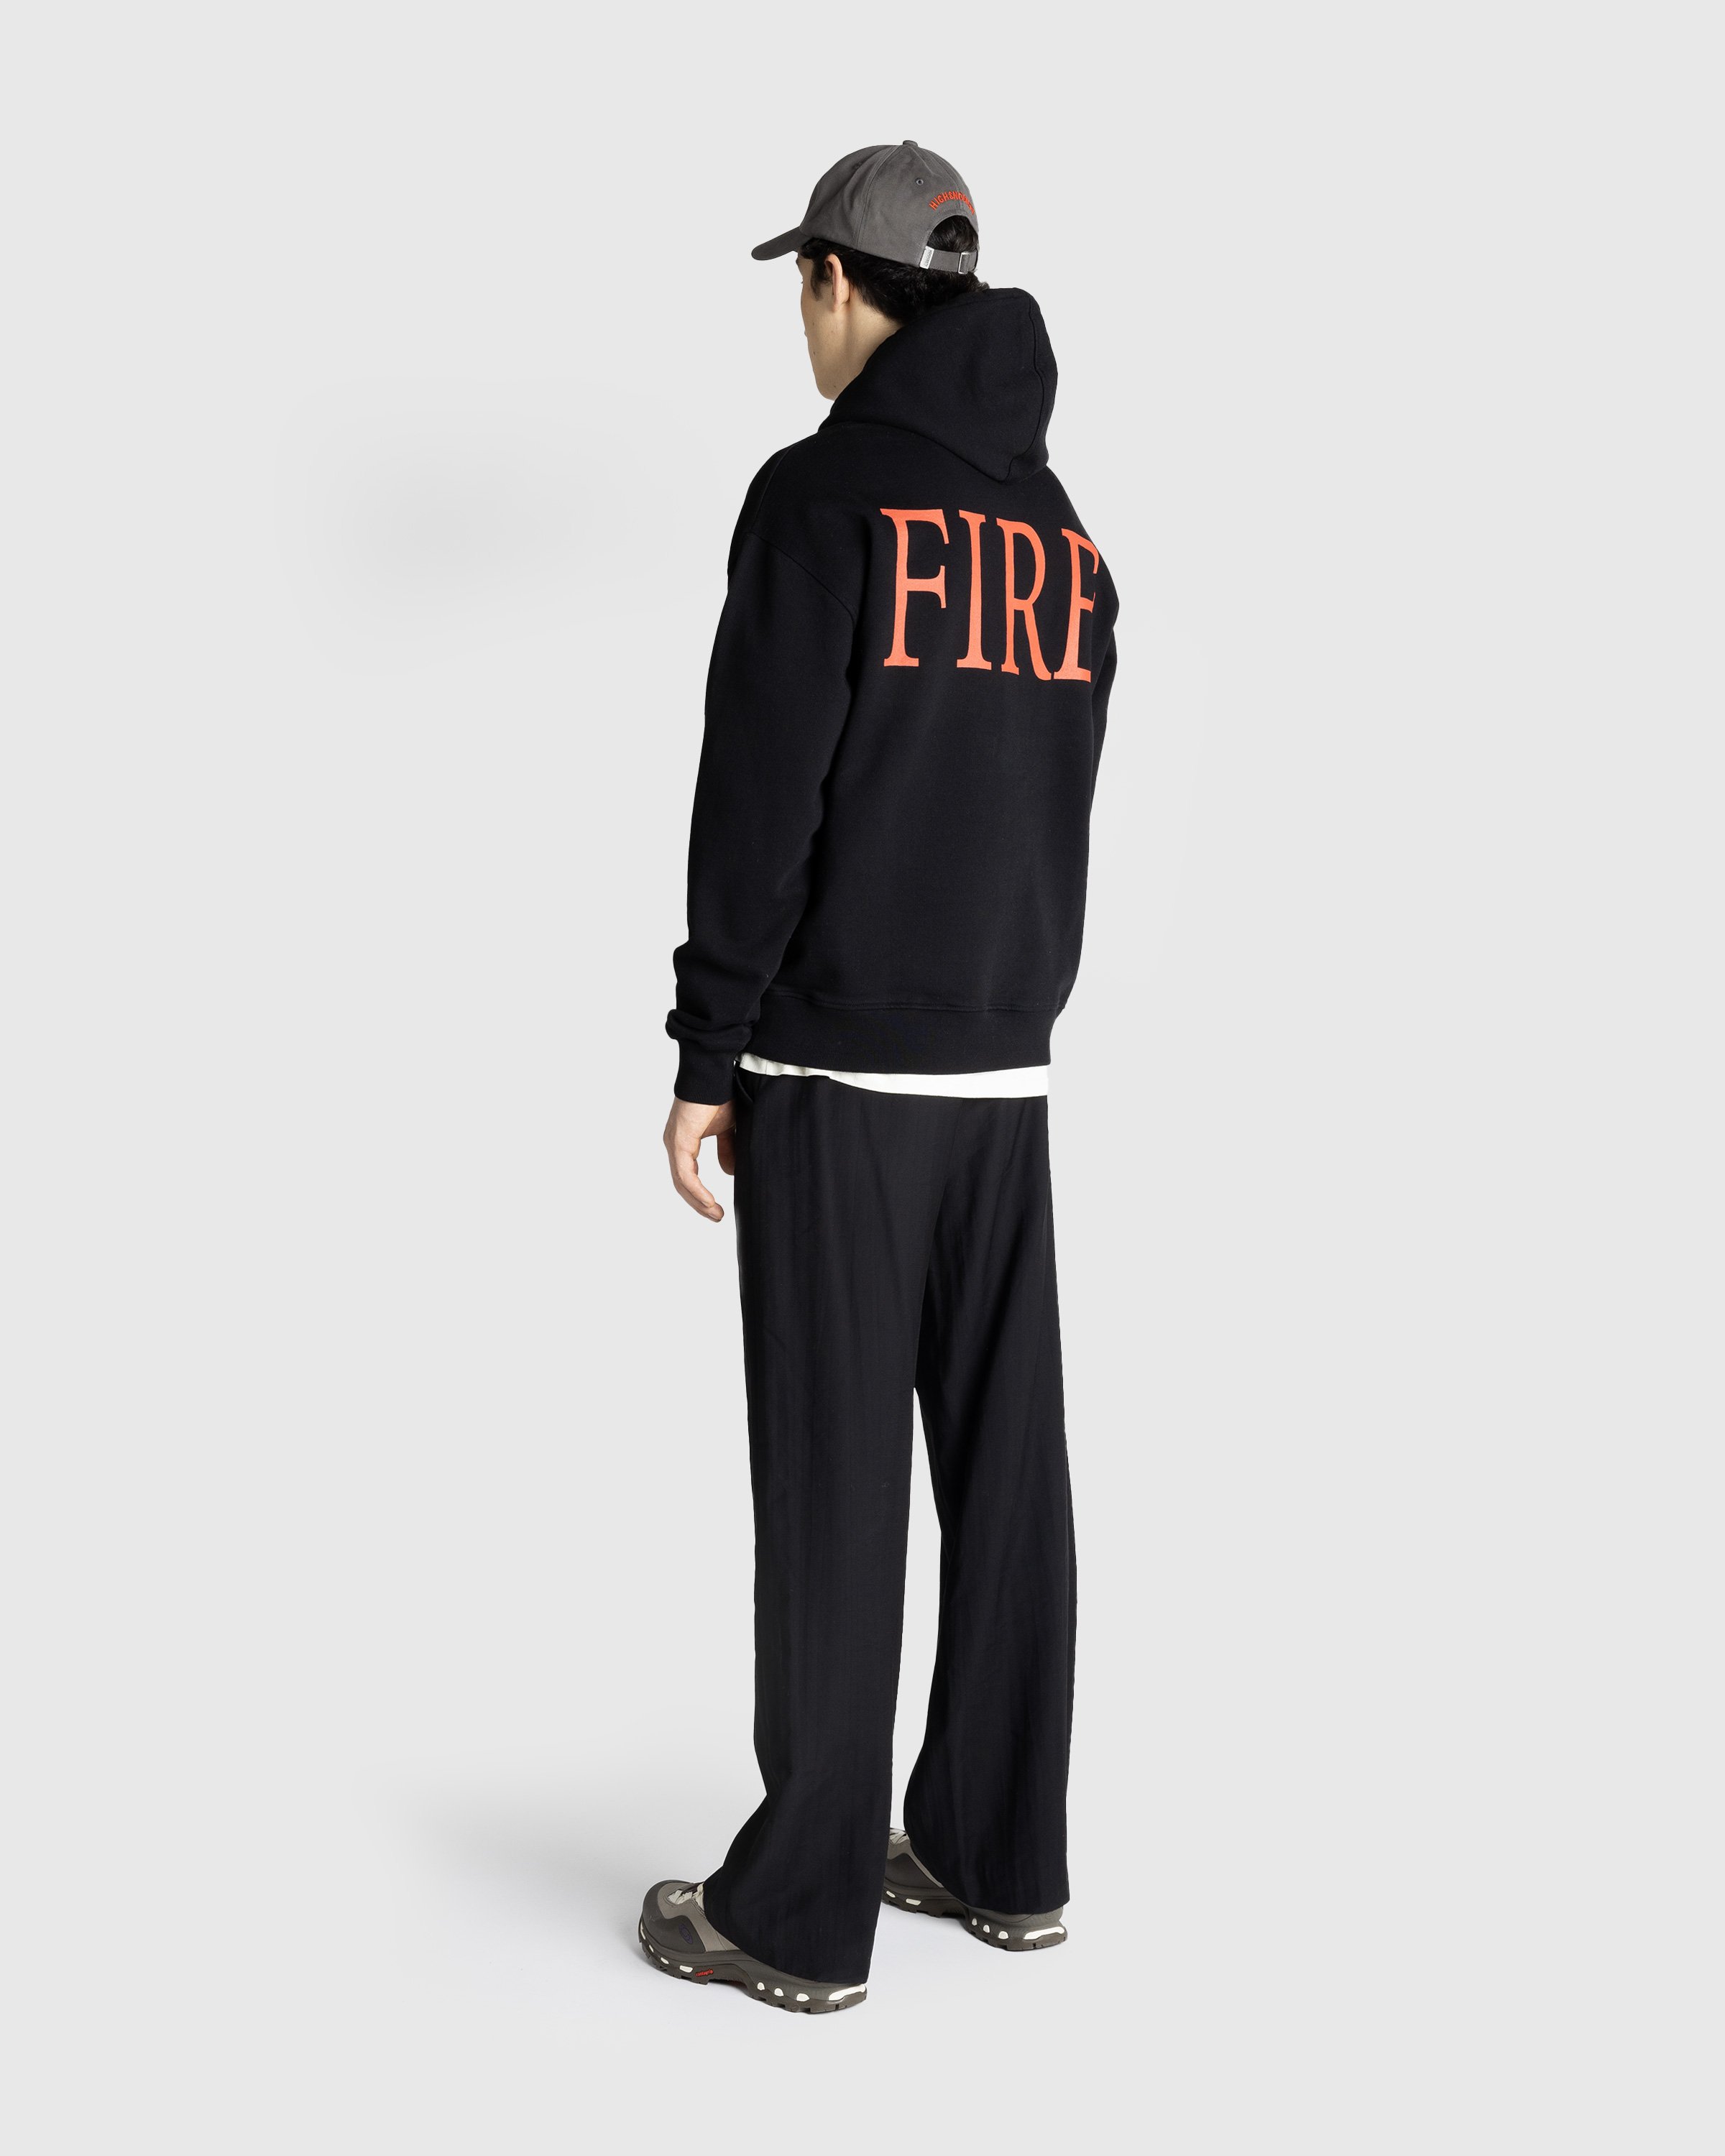 Chiltern Firehouse x Highsnobiety - Hoodie - Clothing -  - Image 5